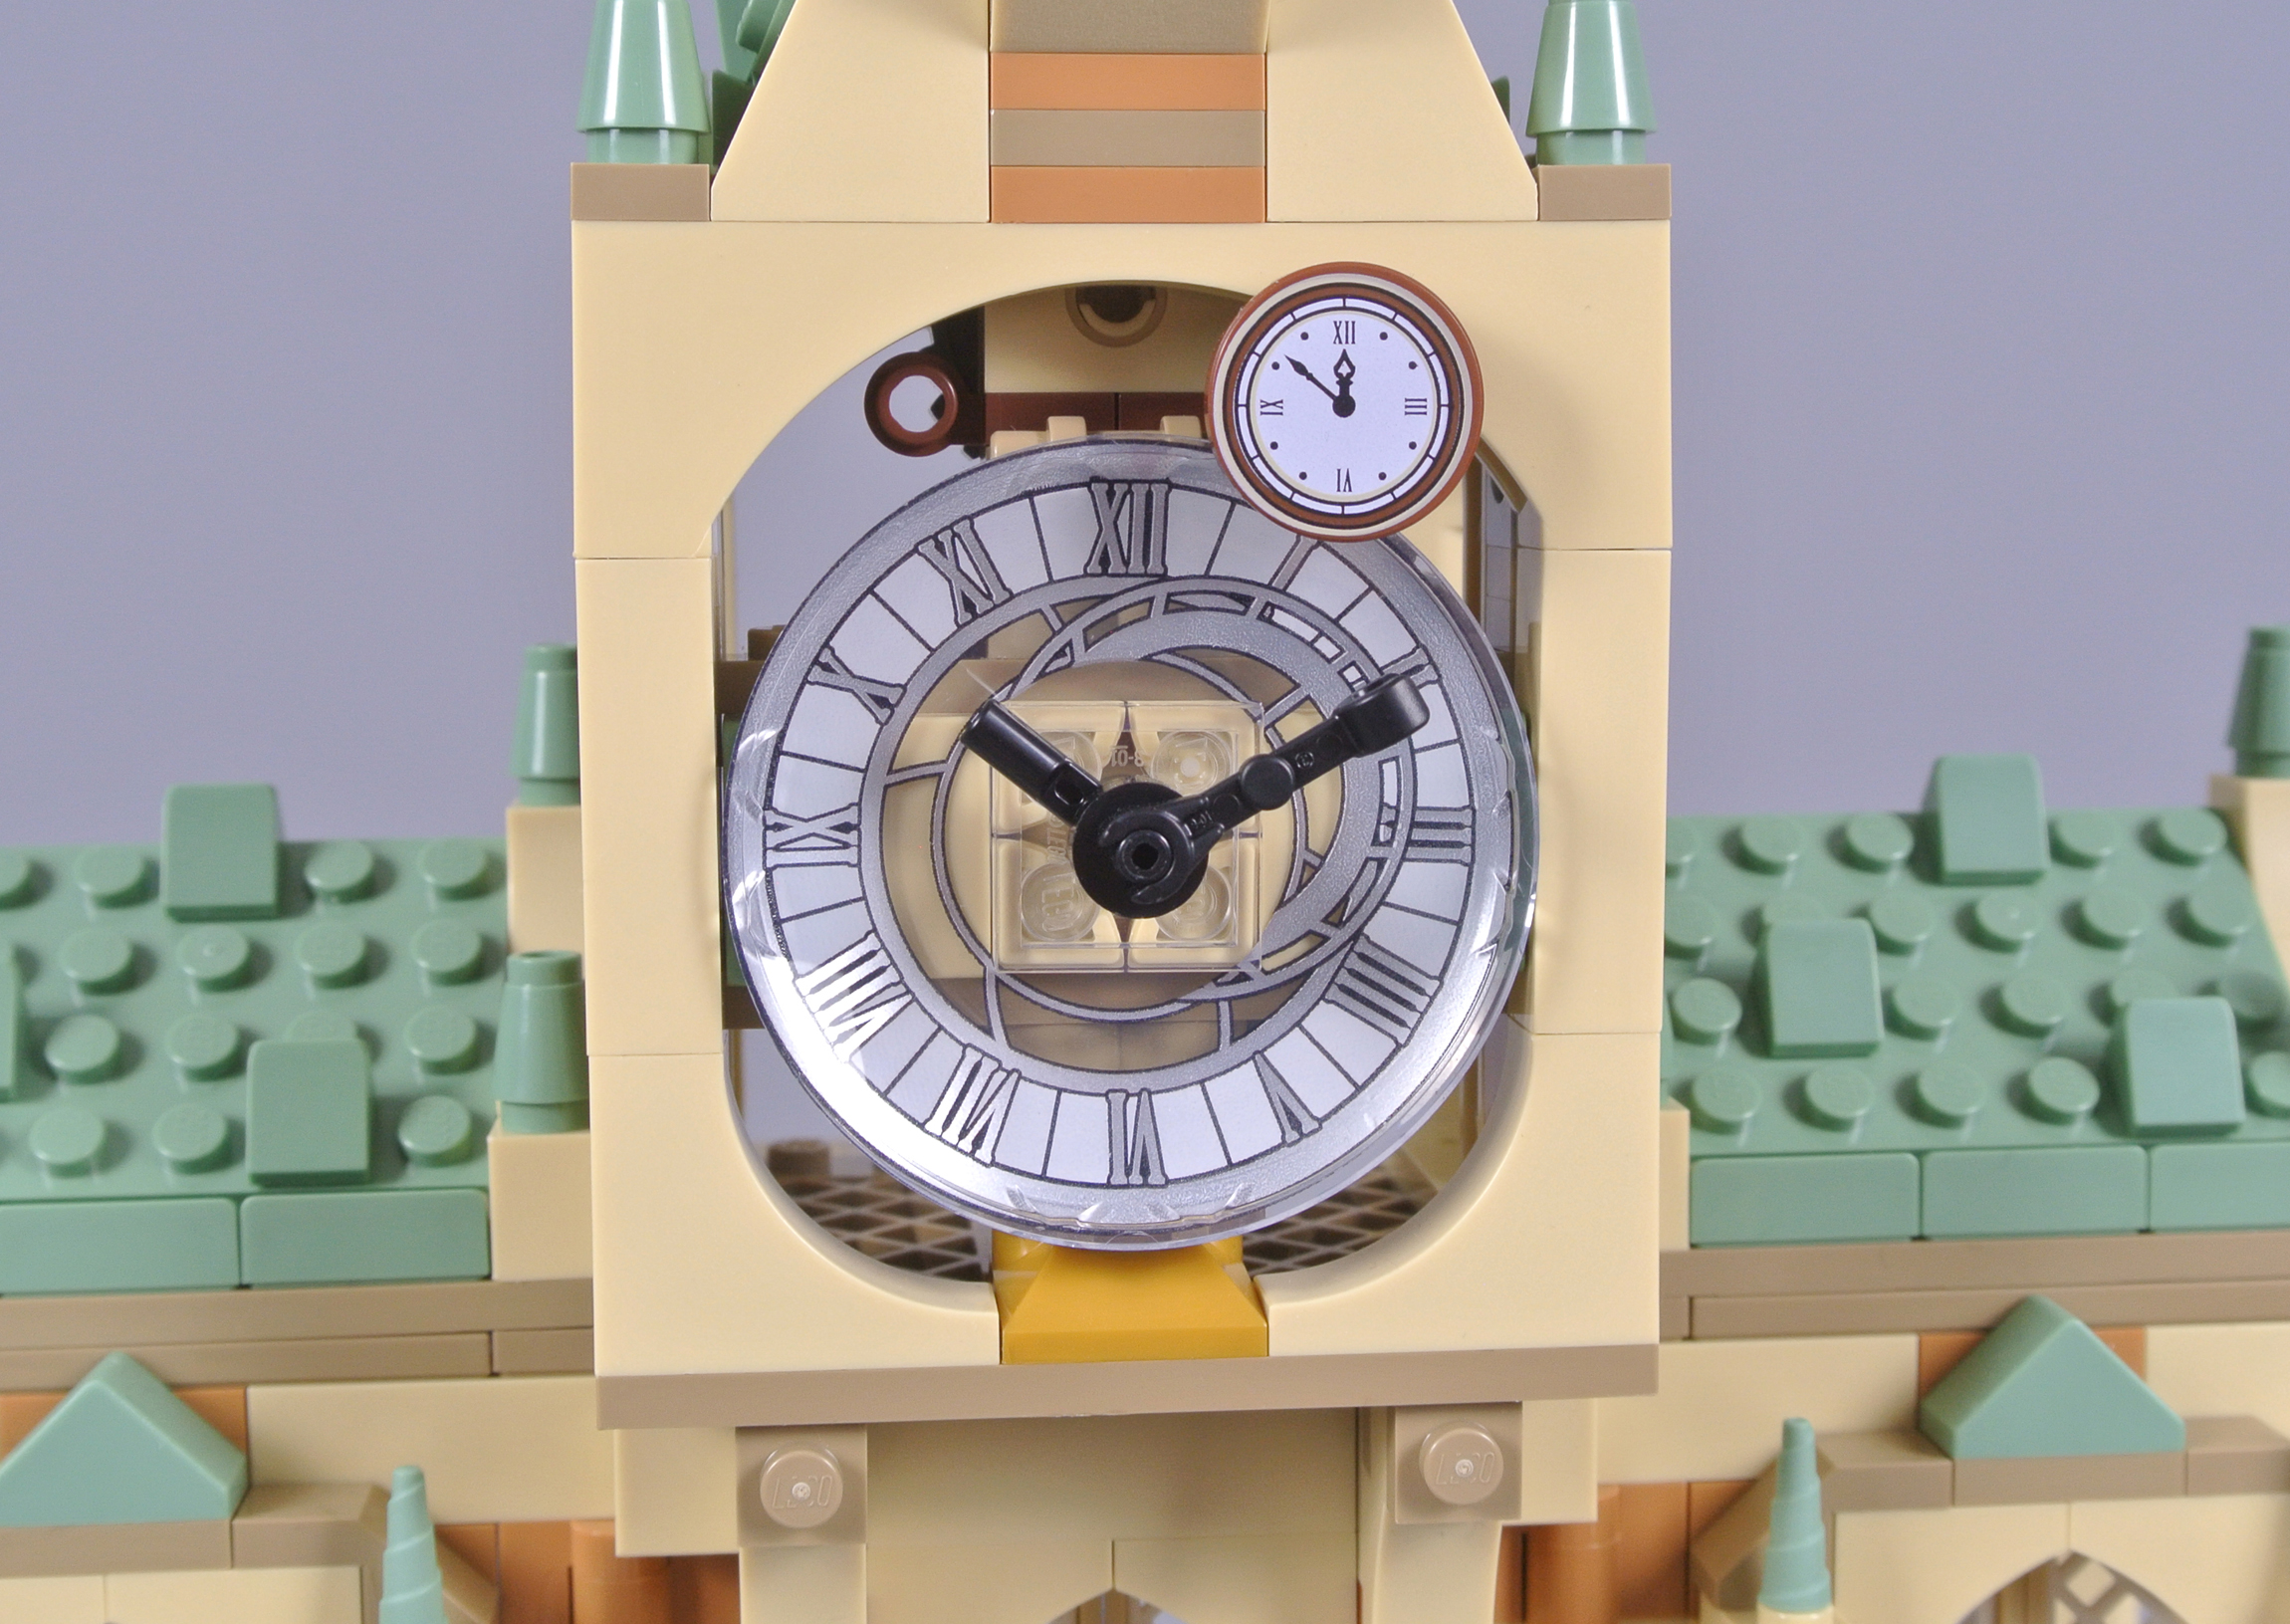  LEGO Harry Potter Hogwarts Hospital Wing 76398 Building Toy  Castle Kit with Clock Tower, The Prisoner of Azkaban, Includes Harry Potter,  Hermione Granger, Ron Weasley & Madam Pomfrey Minifigures : Toys